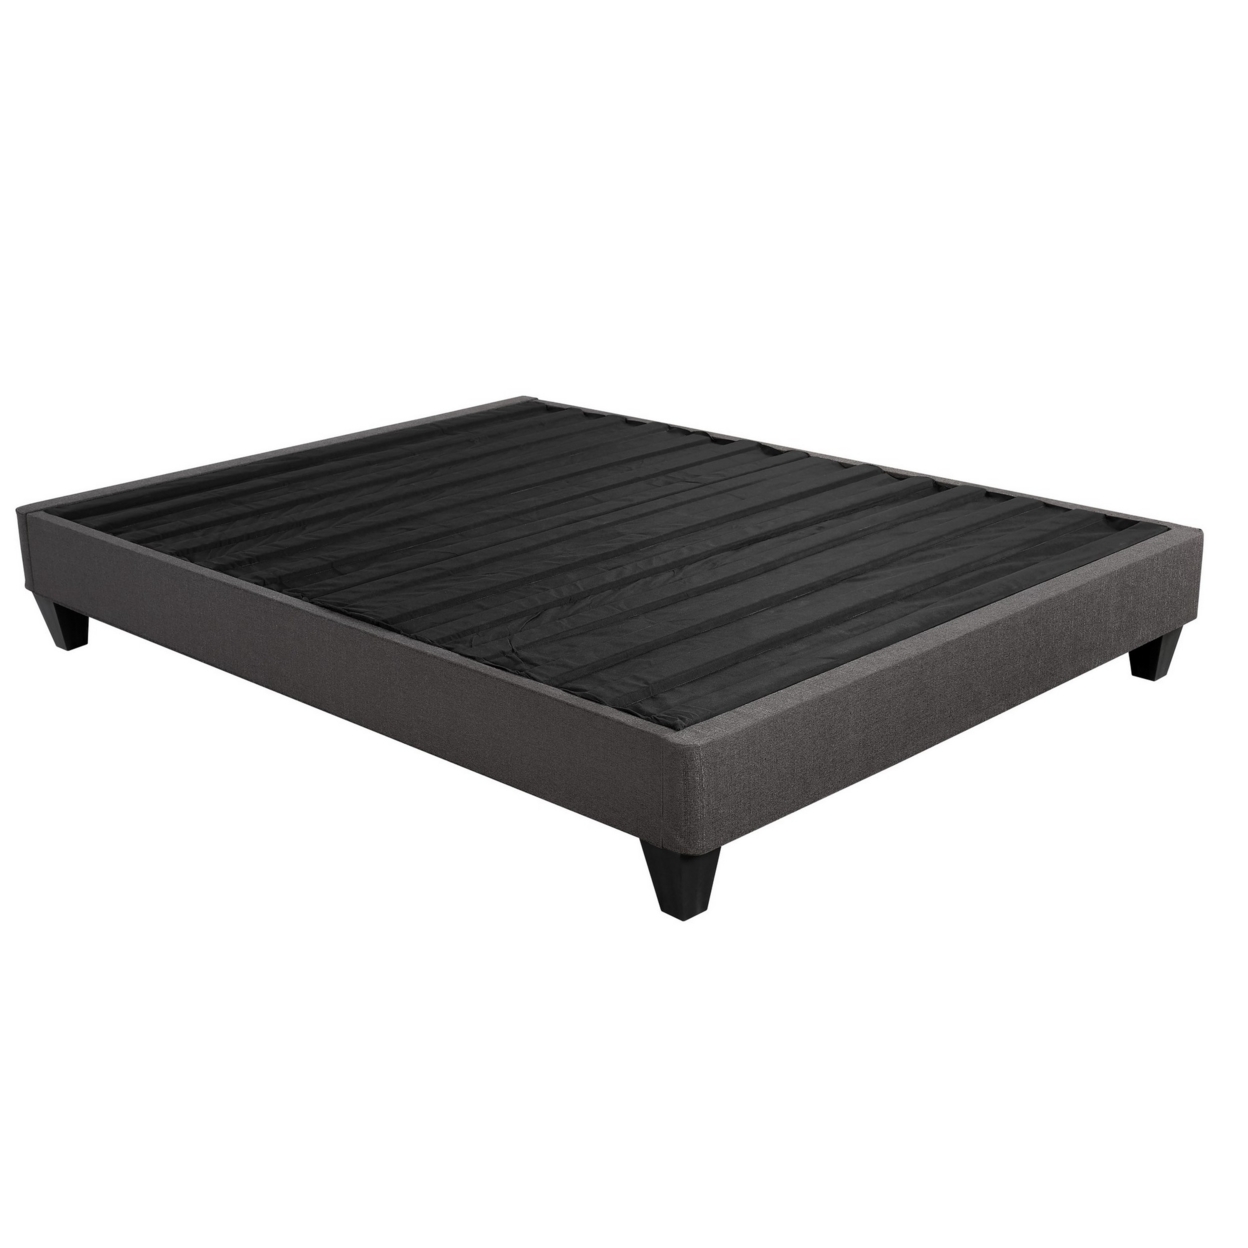 Tamy 13 Inch Queen Size Platform Bed Frame, Wood Base, Dark Gray Linen- Saltoro Sherpi